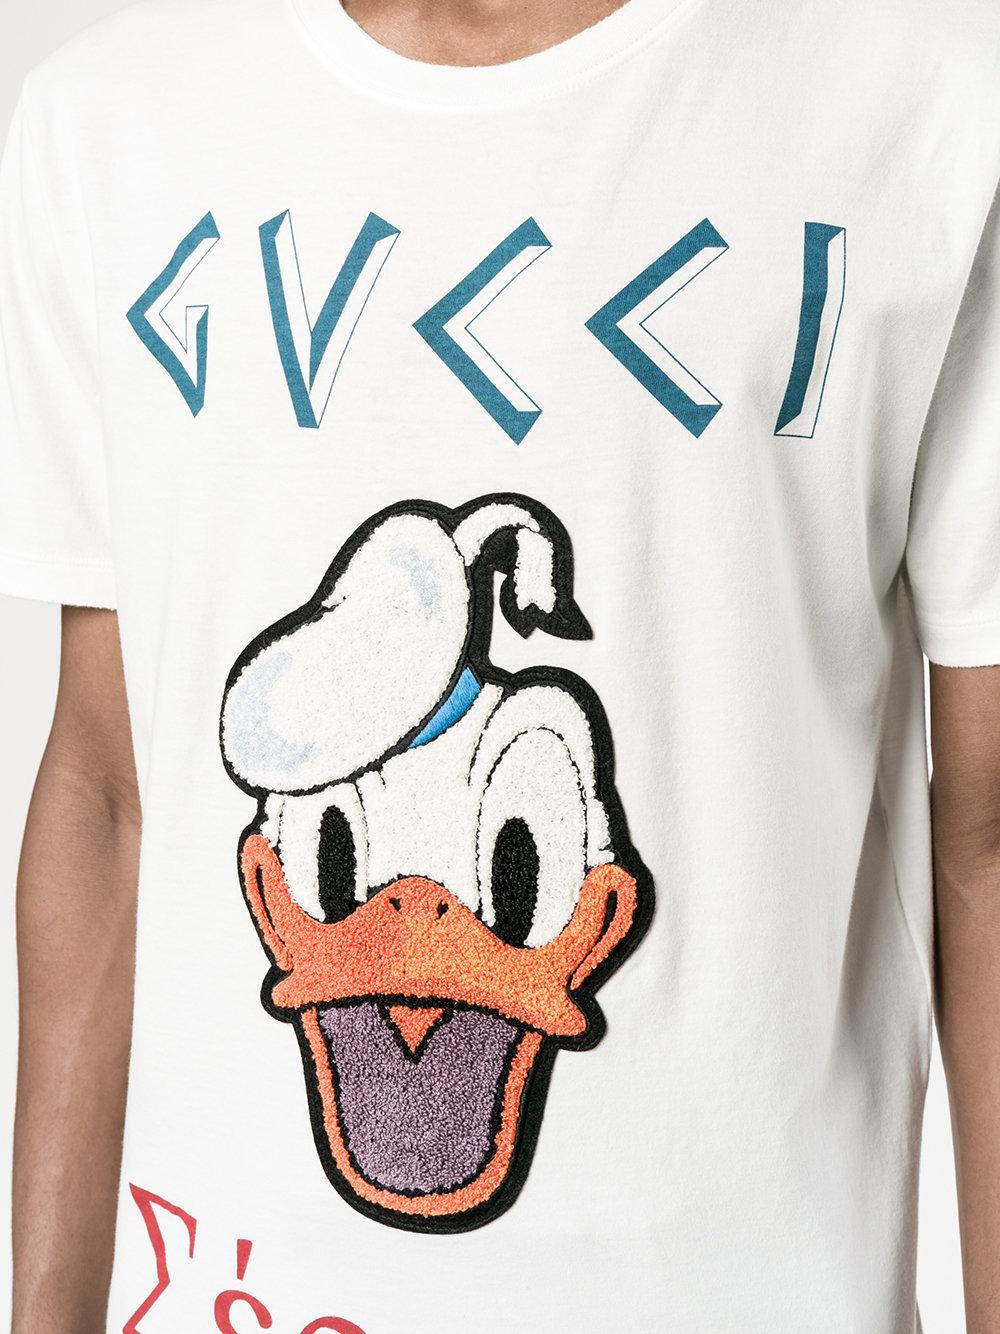 donald duck gucci shirt